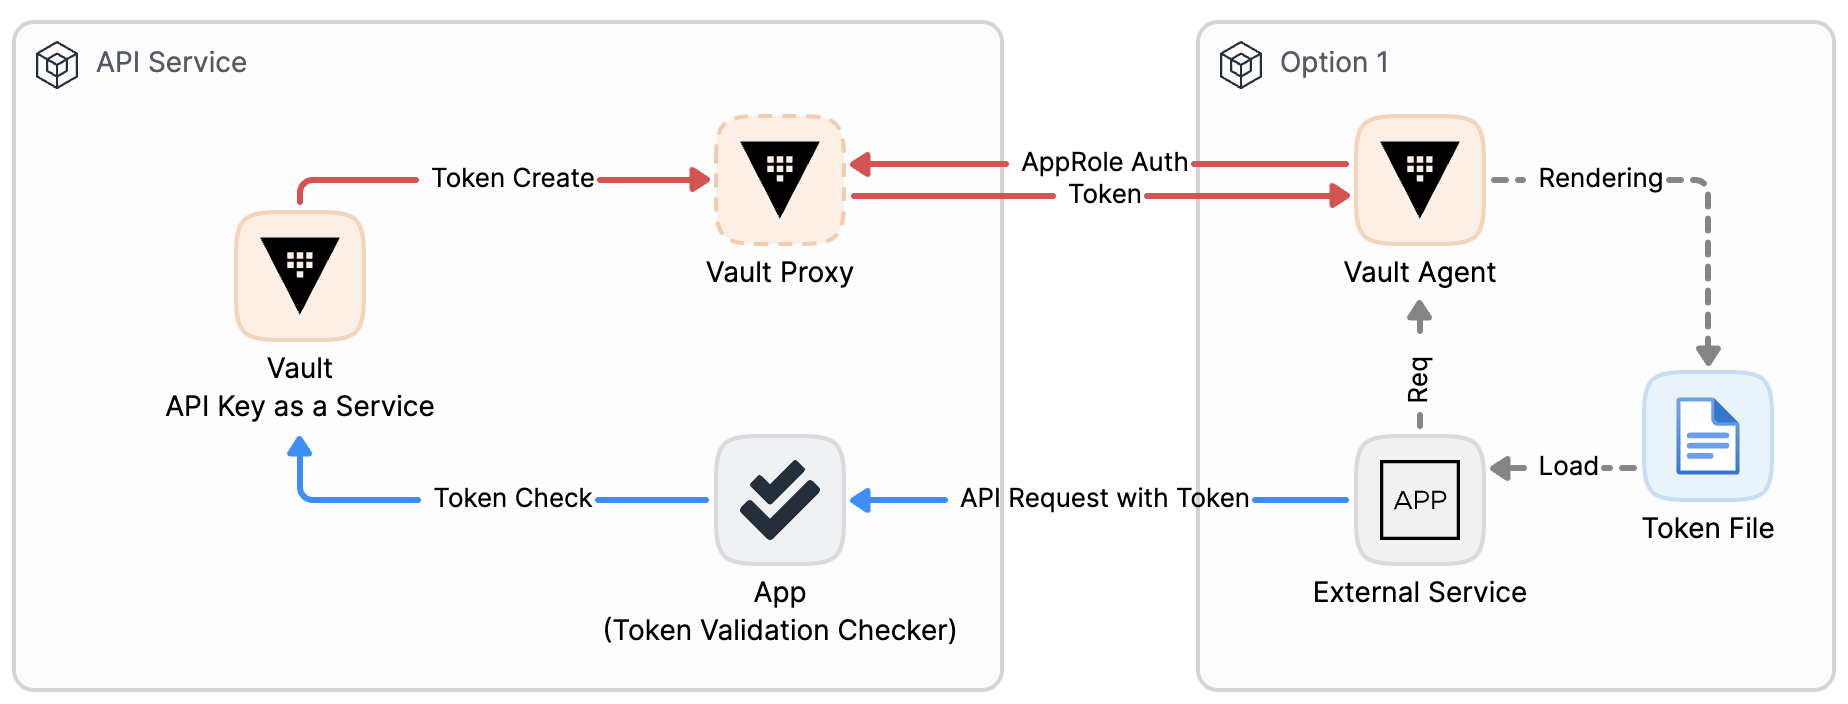 API Key 자동화 - Vault Agent 활용